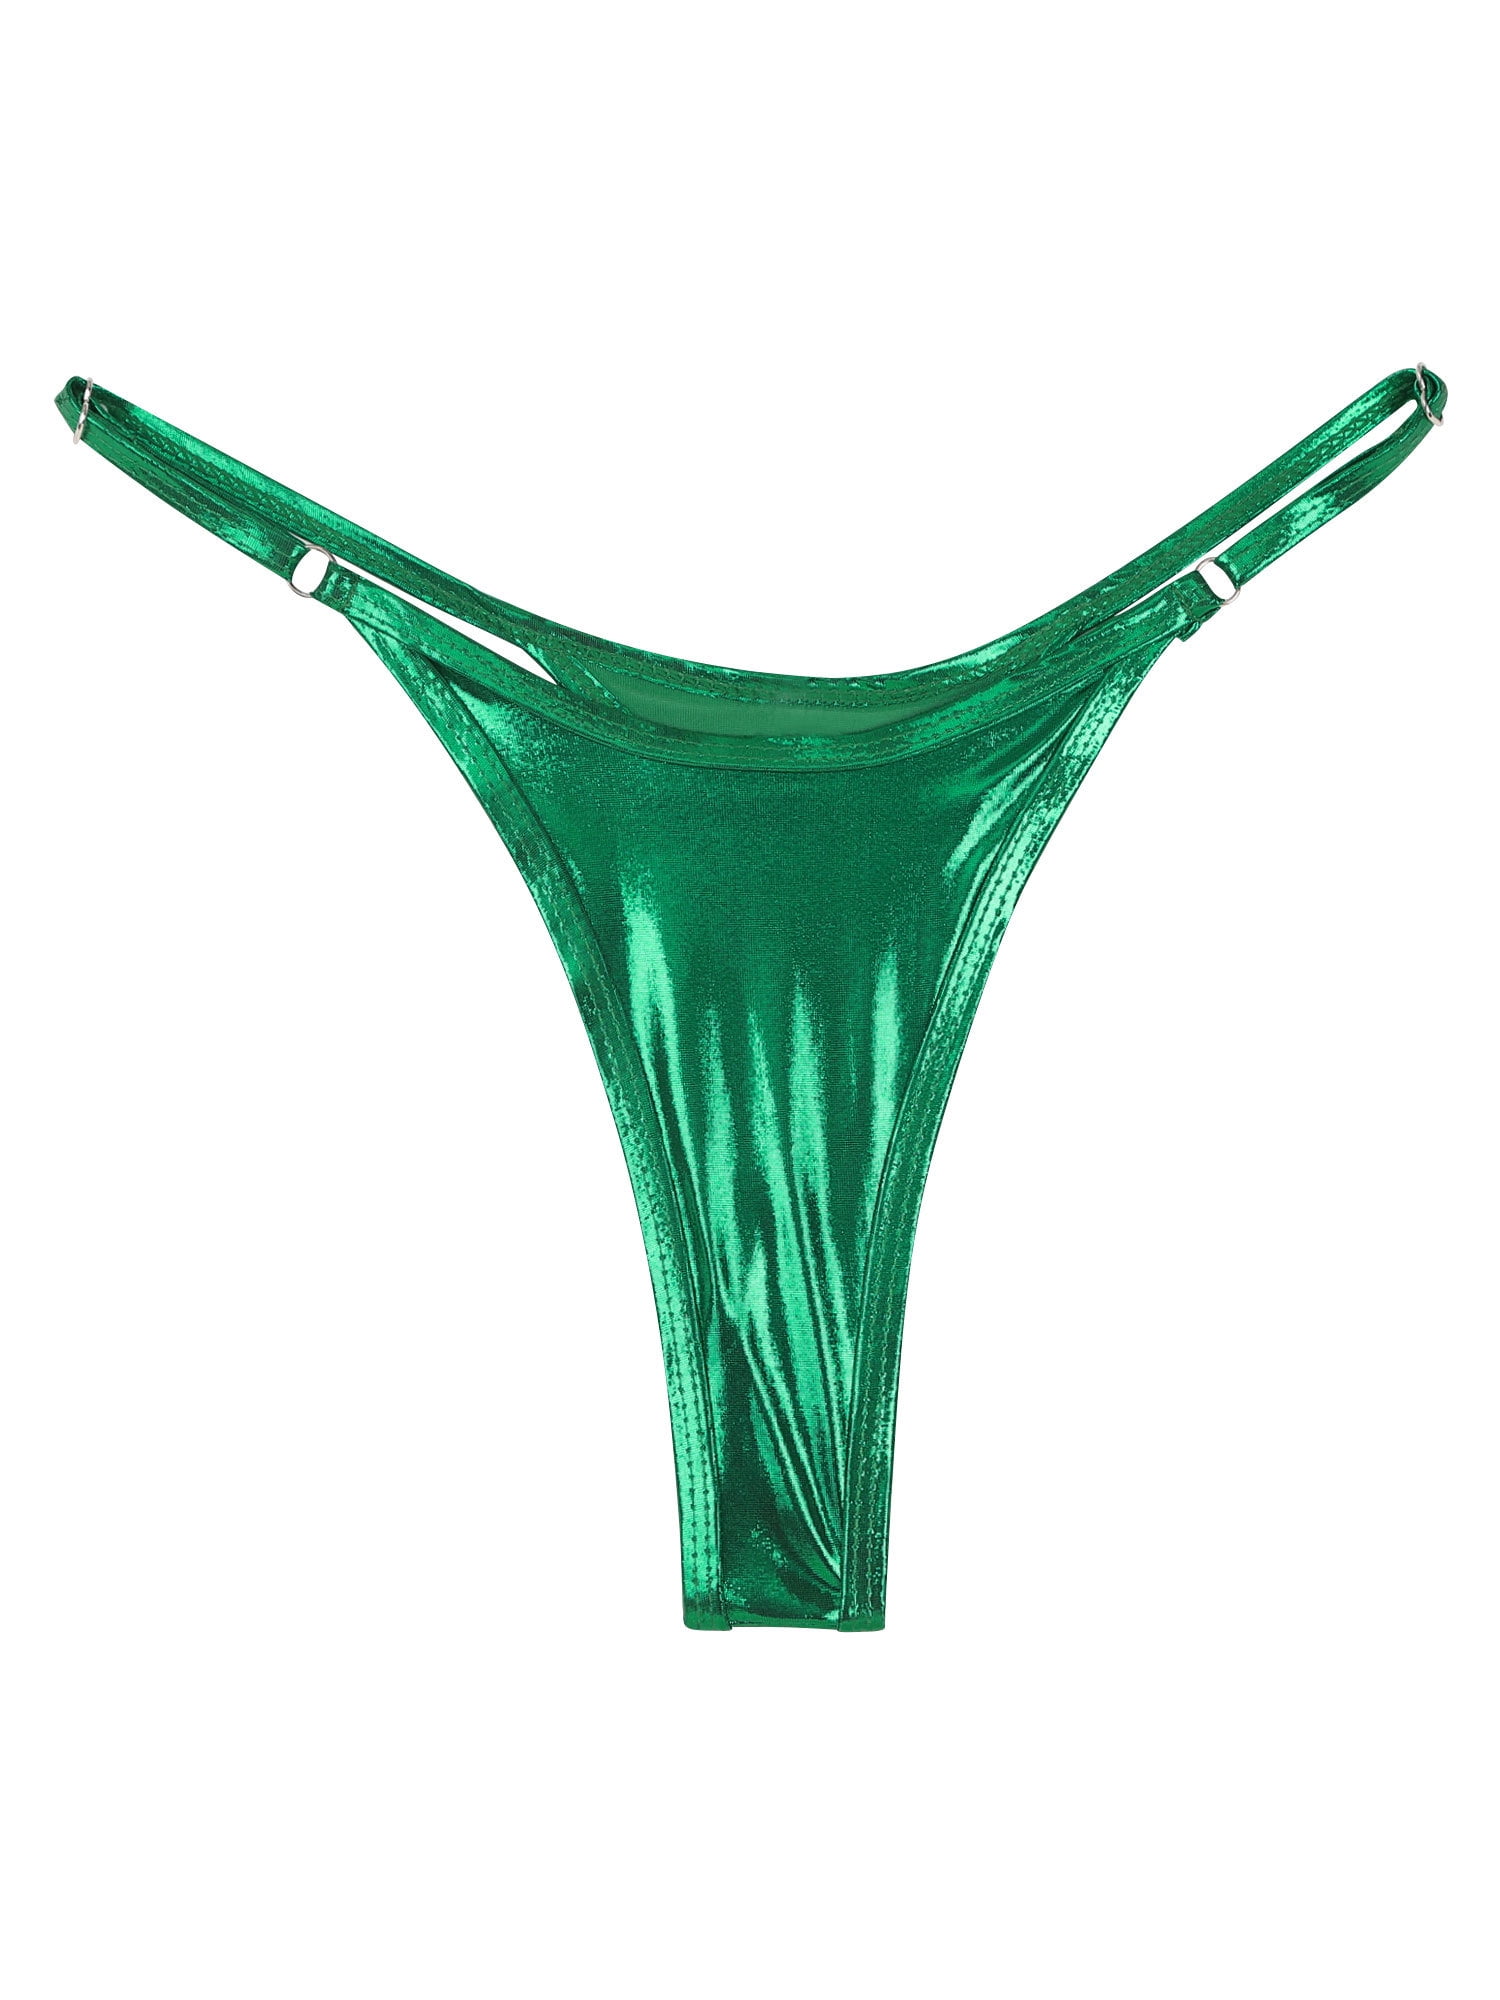 Womens Panties Sexy G String Tong Transparent Lace Underwear Lingerie  Brazilian Calcinhas Tangas From Hemplove, $32.86